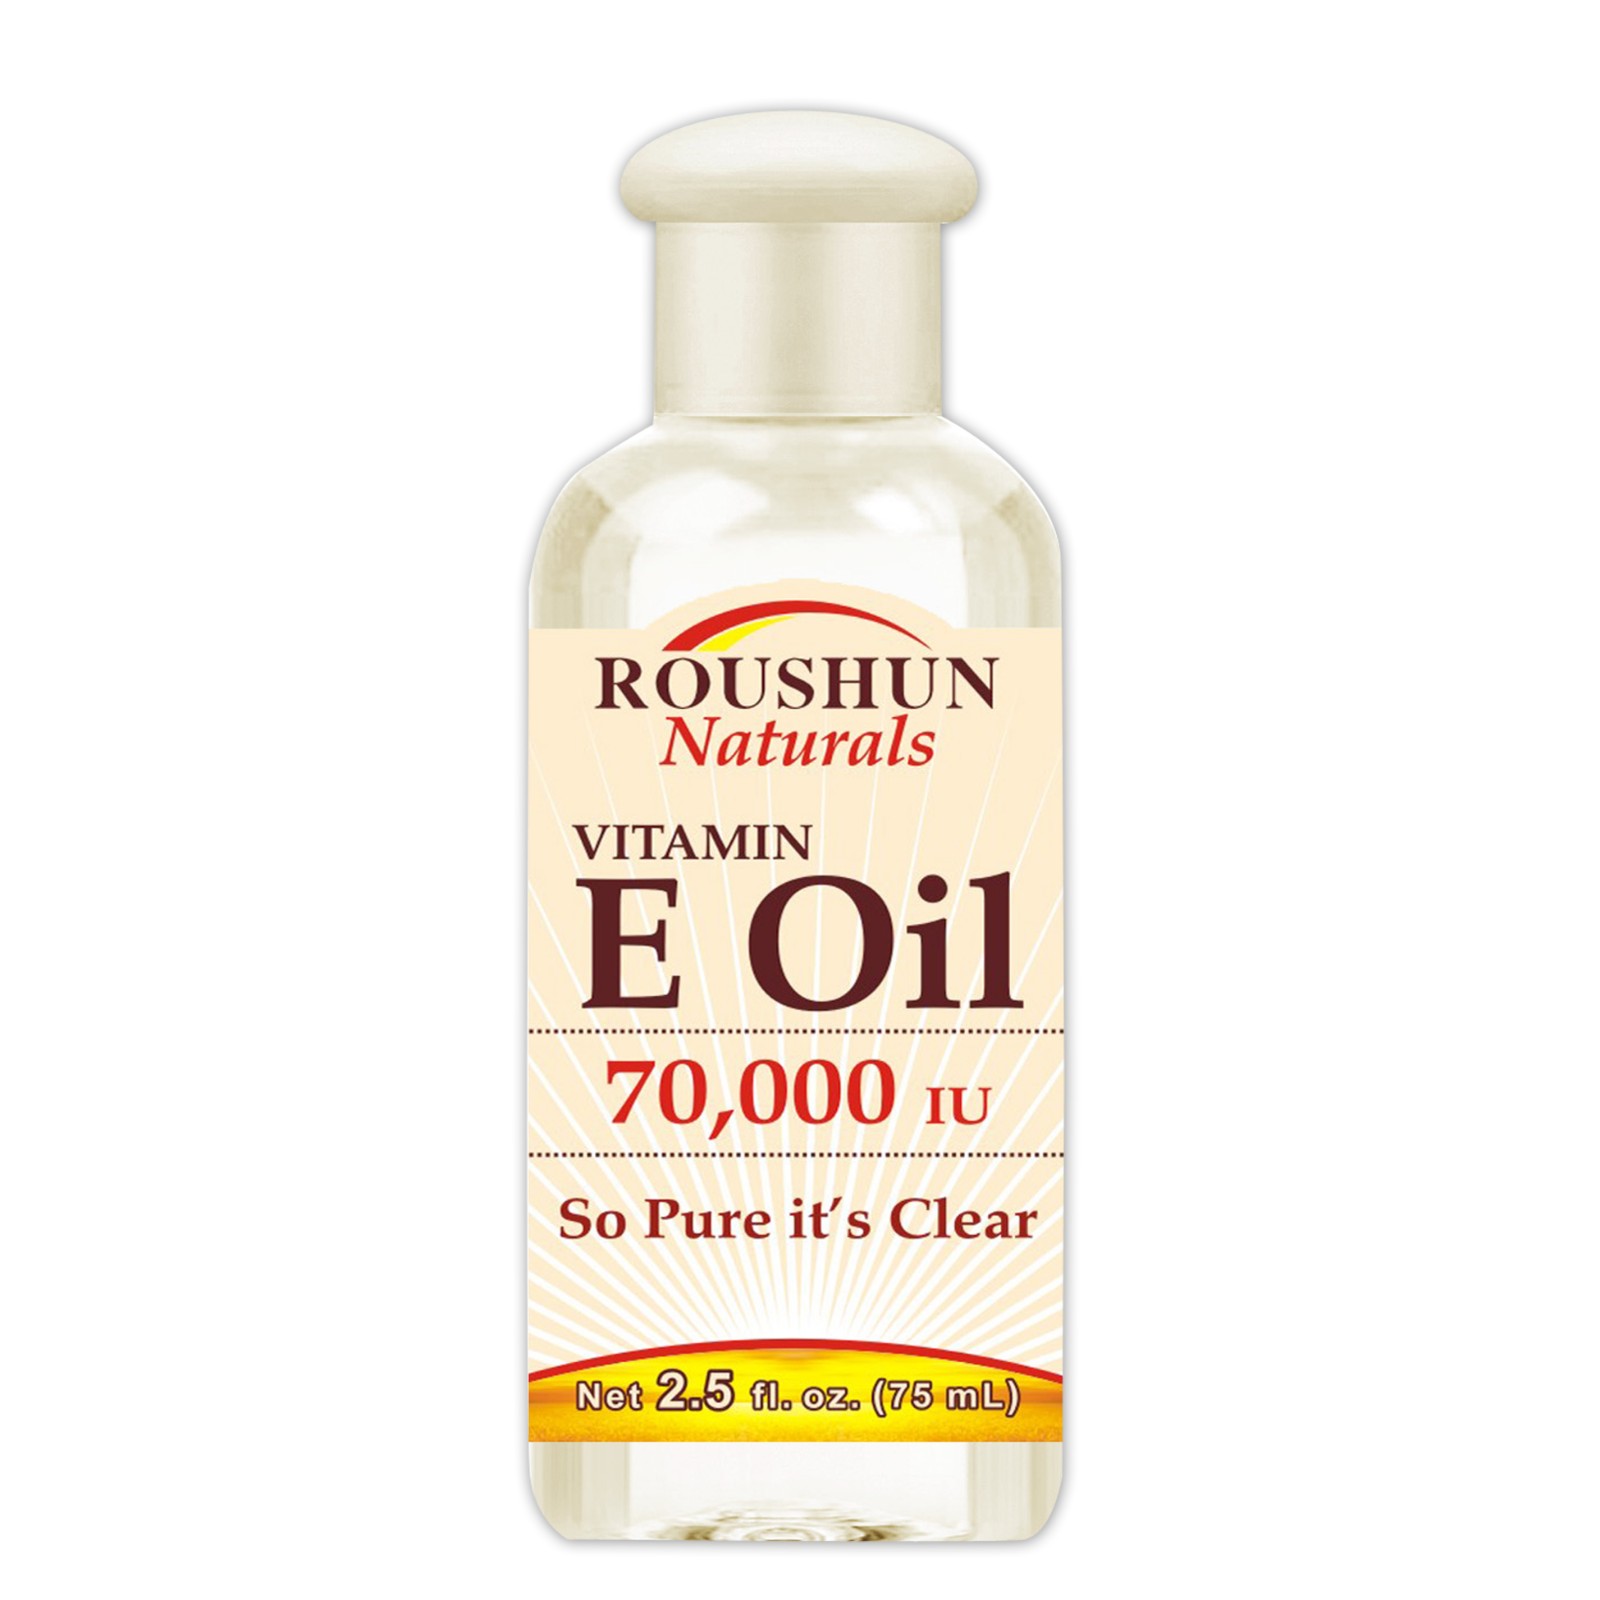 Roushun brand quality vitamin E oil moisturizing nourishing 